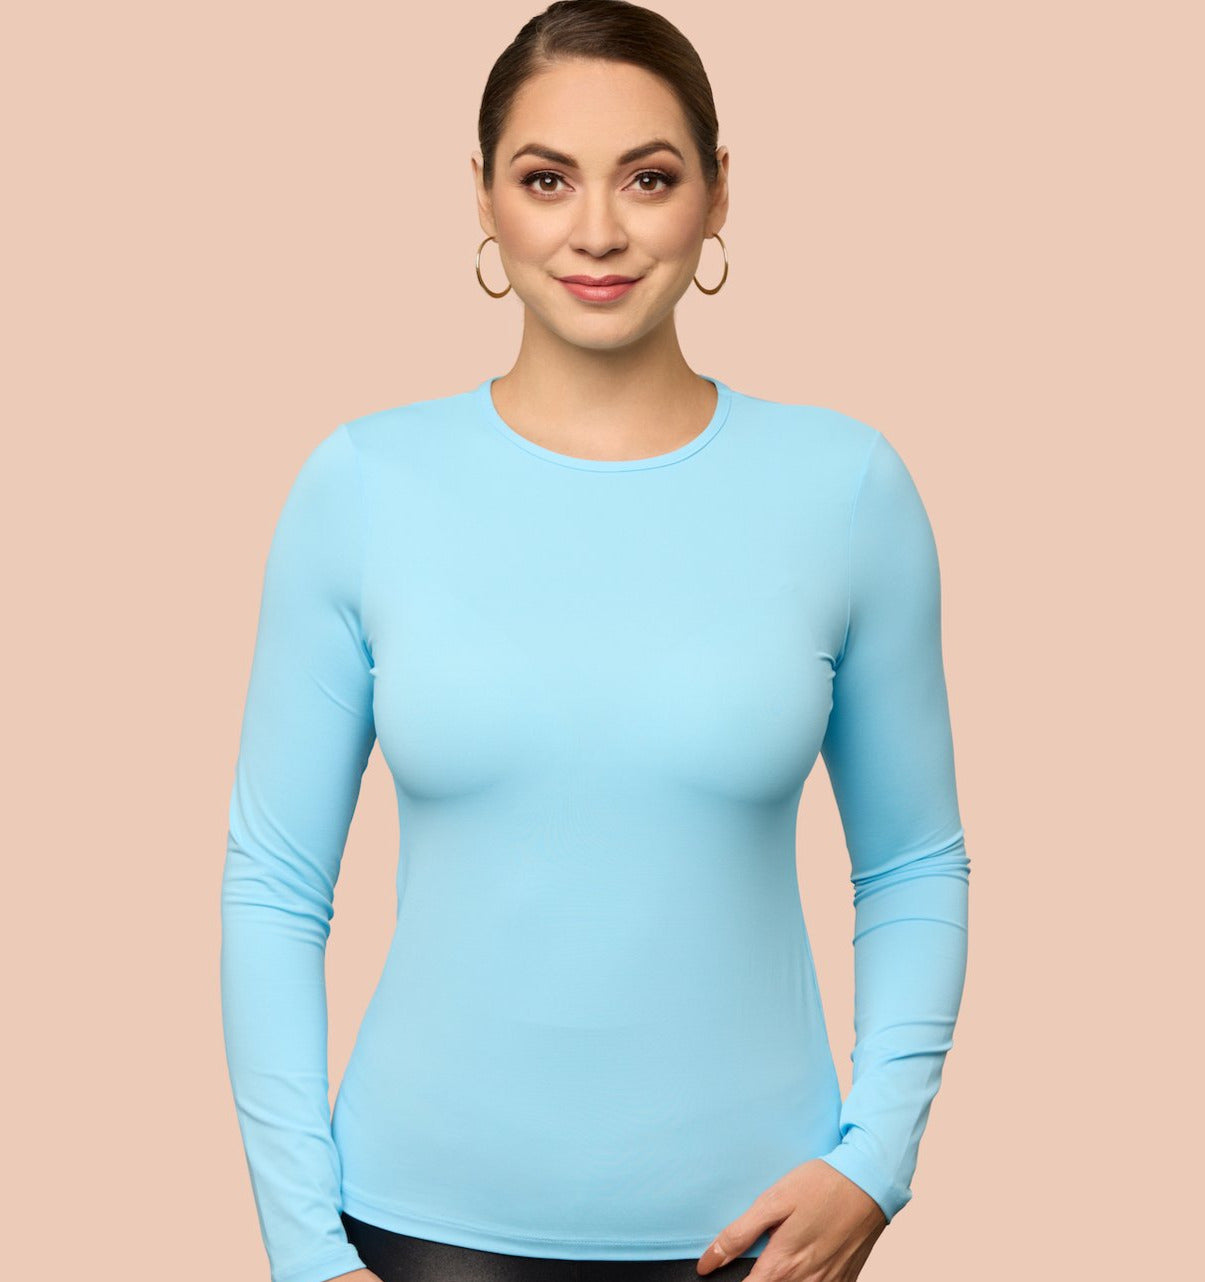 Long Sleeve Layering Shirts for Women Womens T Shirts Long Sleeves